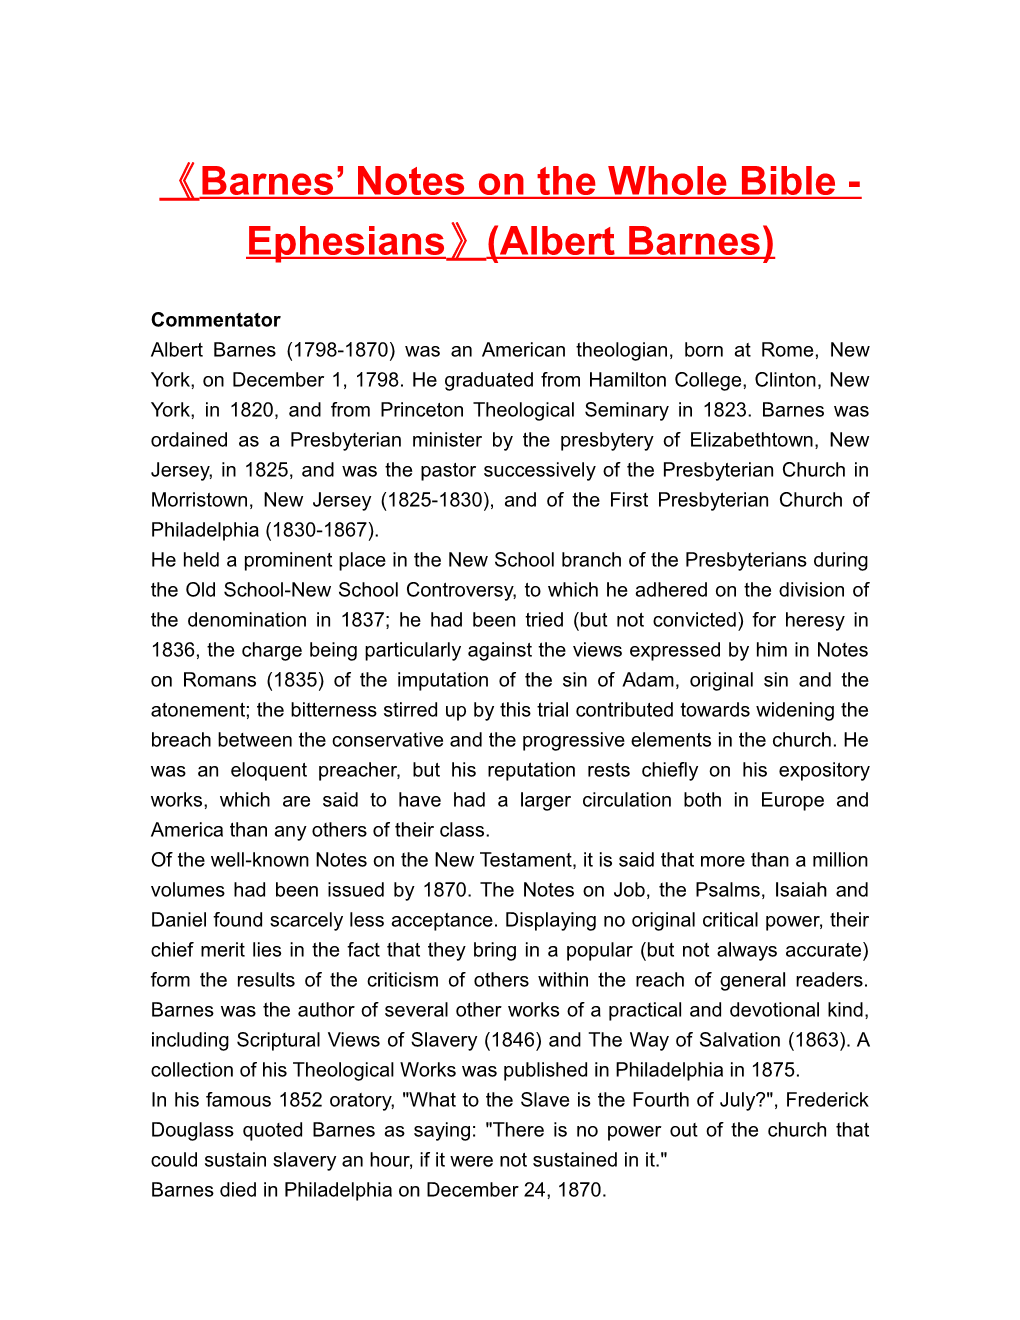 Barnes Notes on the Whole Bible - Ephesians (Albert Barnes)